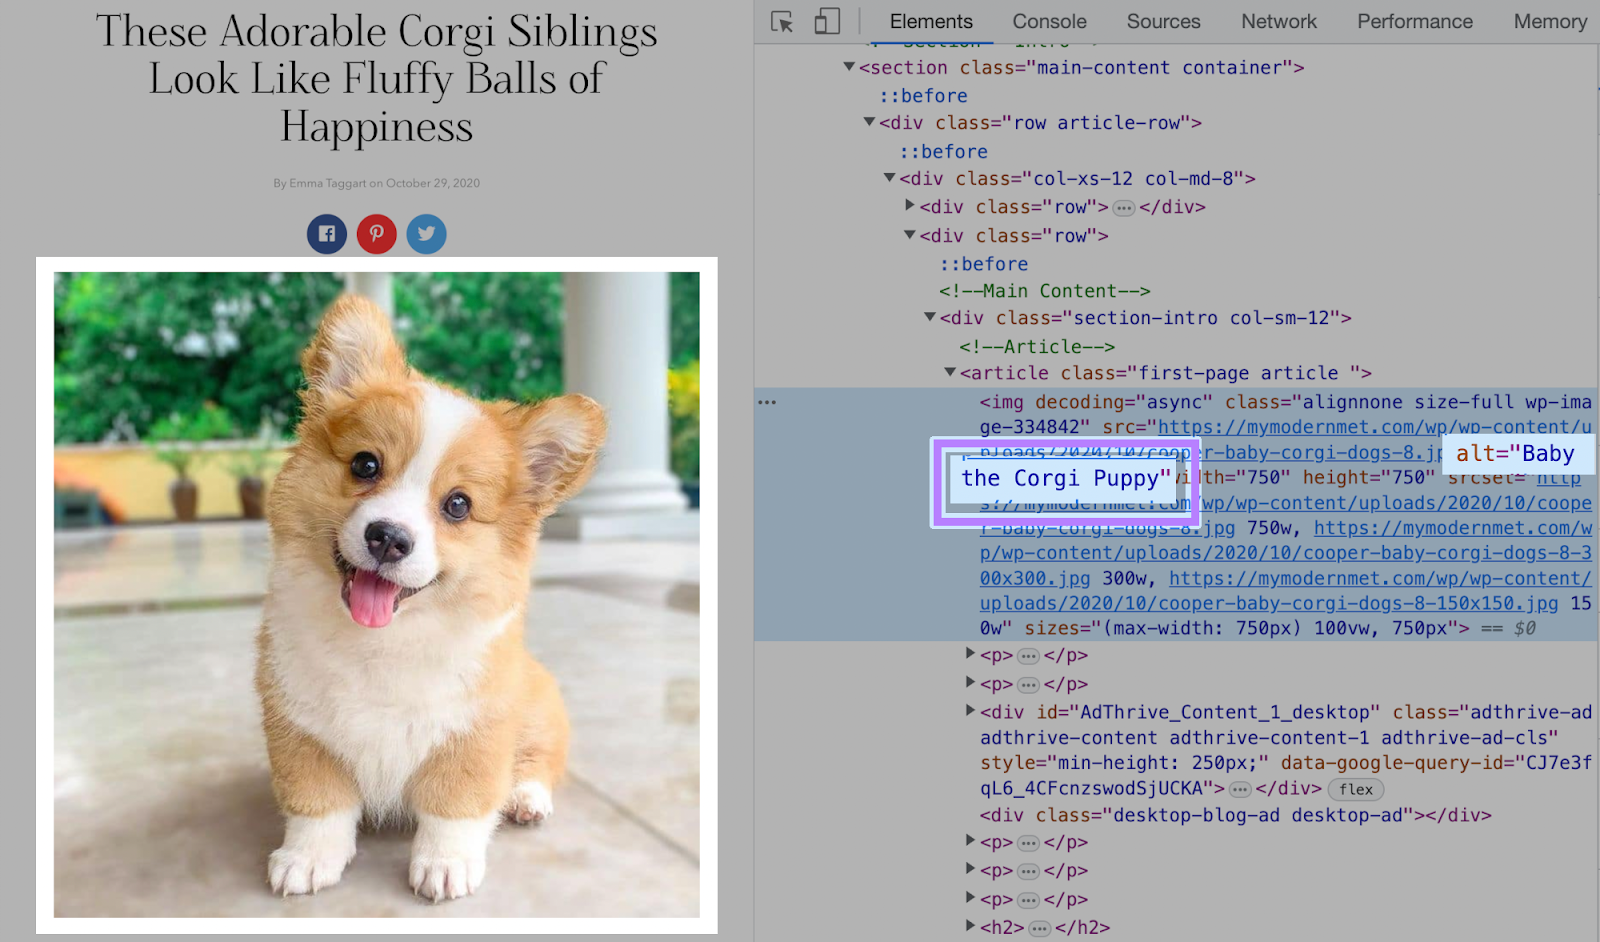 Corgi puppy image has alt text "Baby the Corgi Puppy"